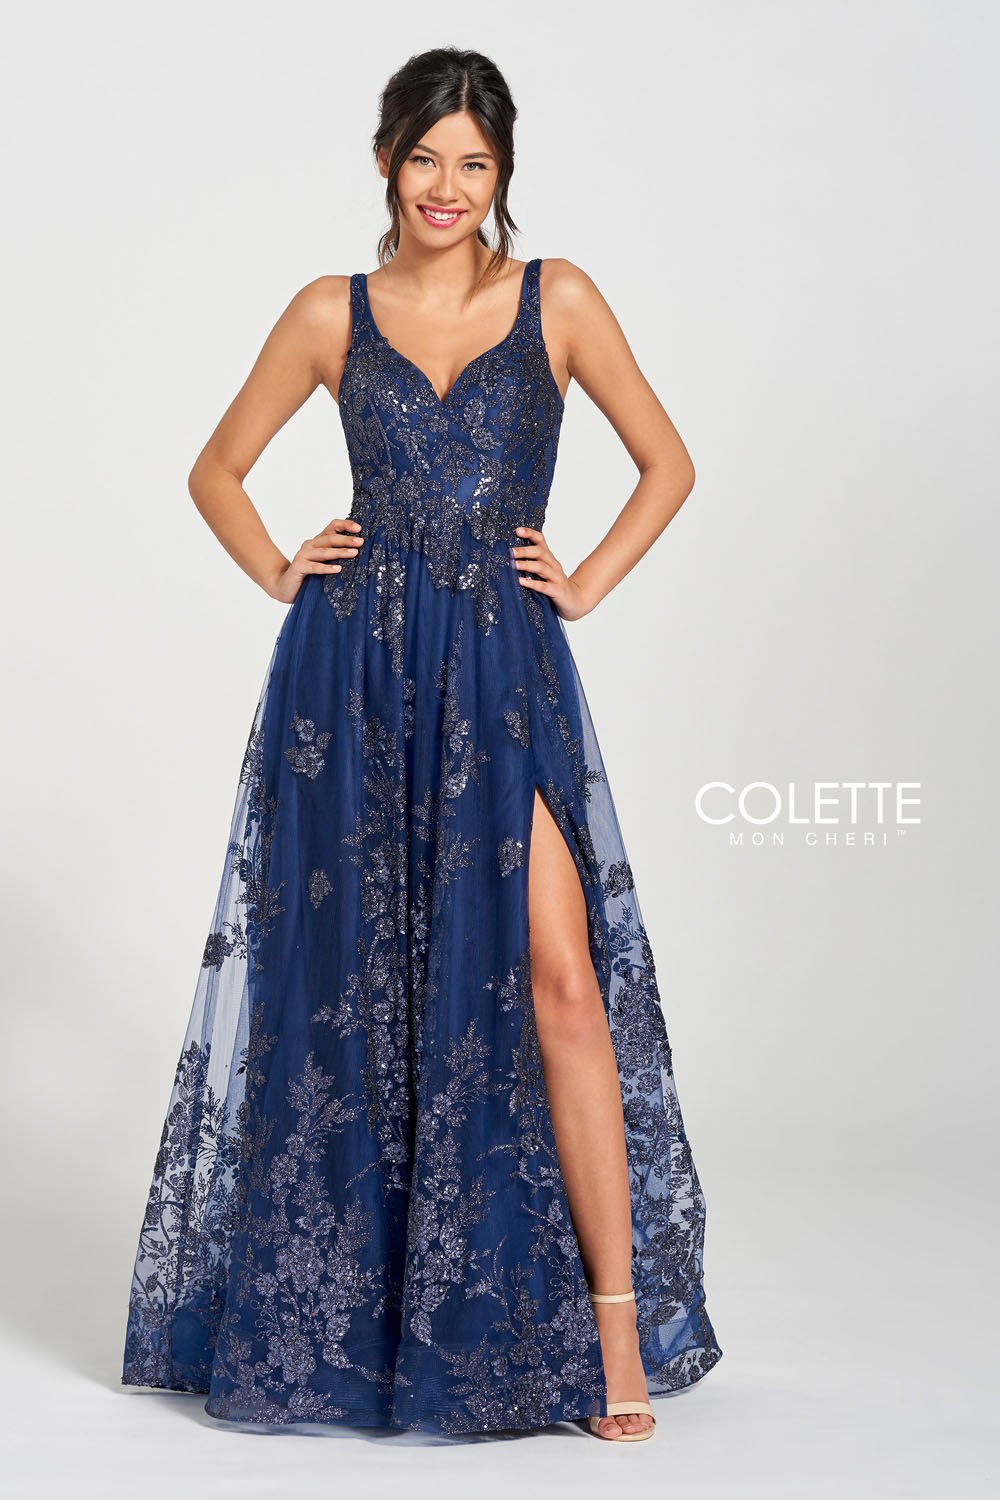 Colette CL12215 Navy Blue prom dresses.  Navy Blue prom dresses image by Colette.